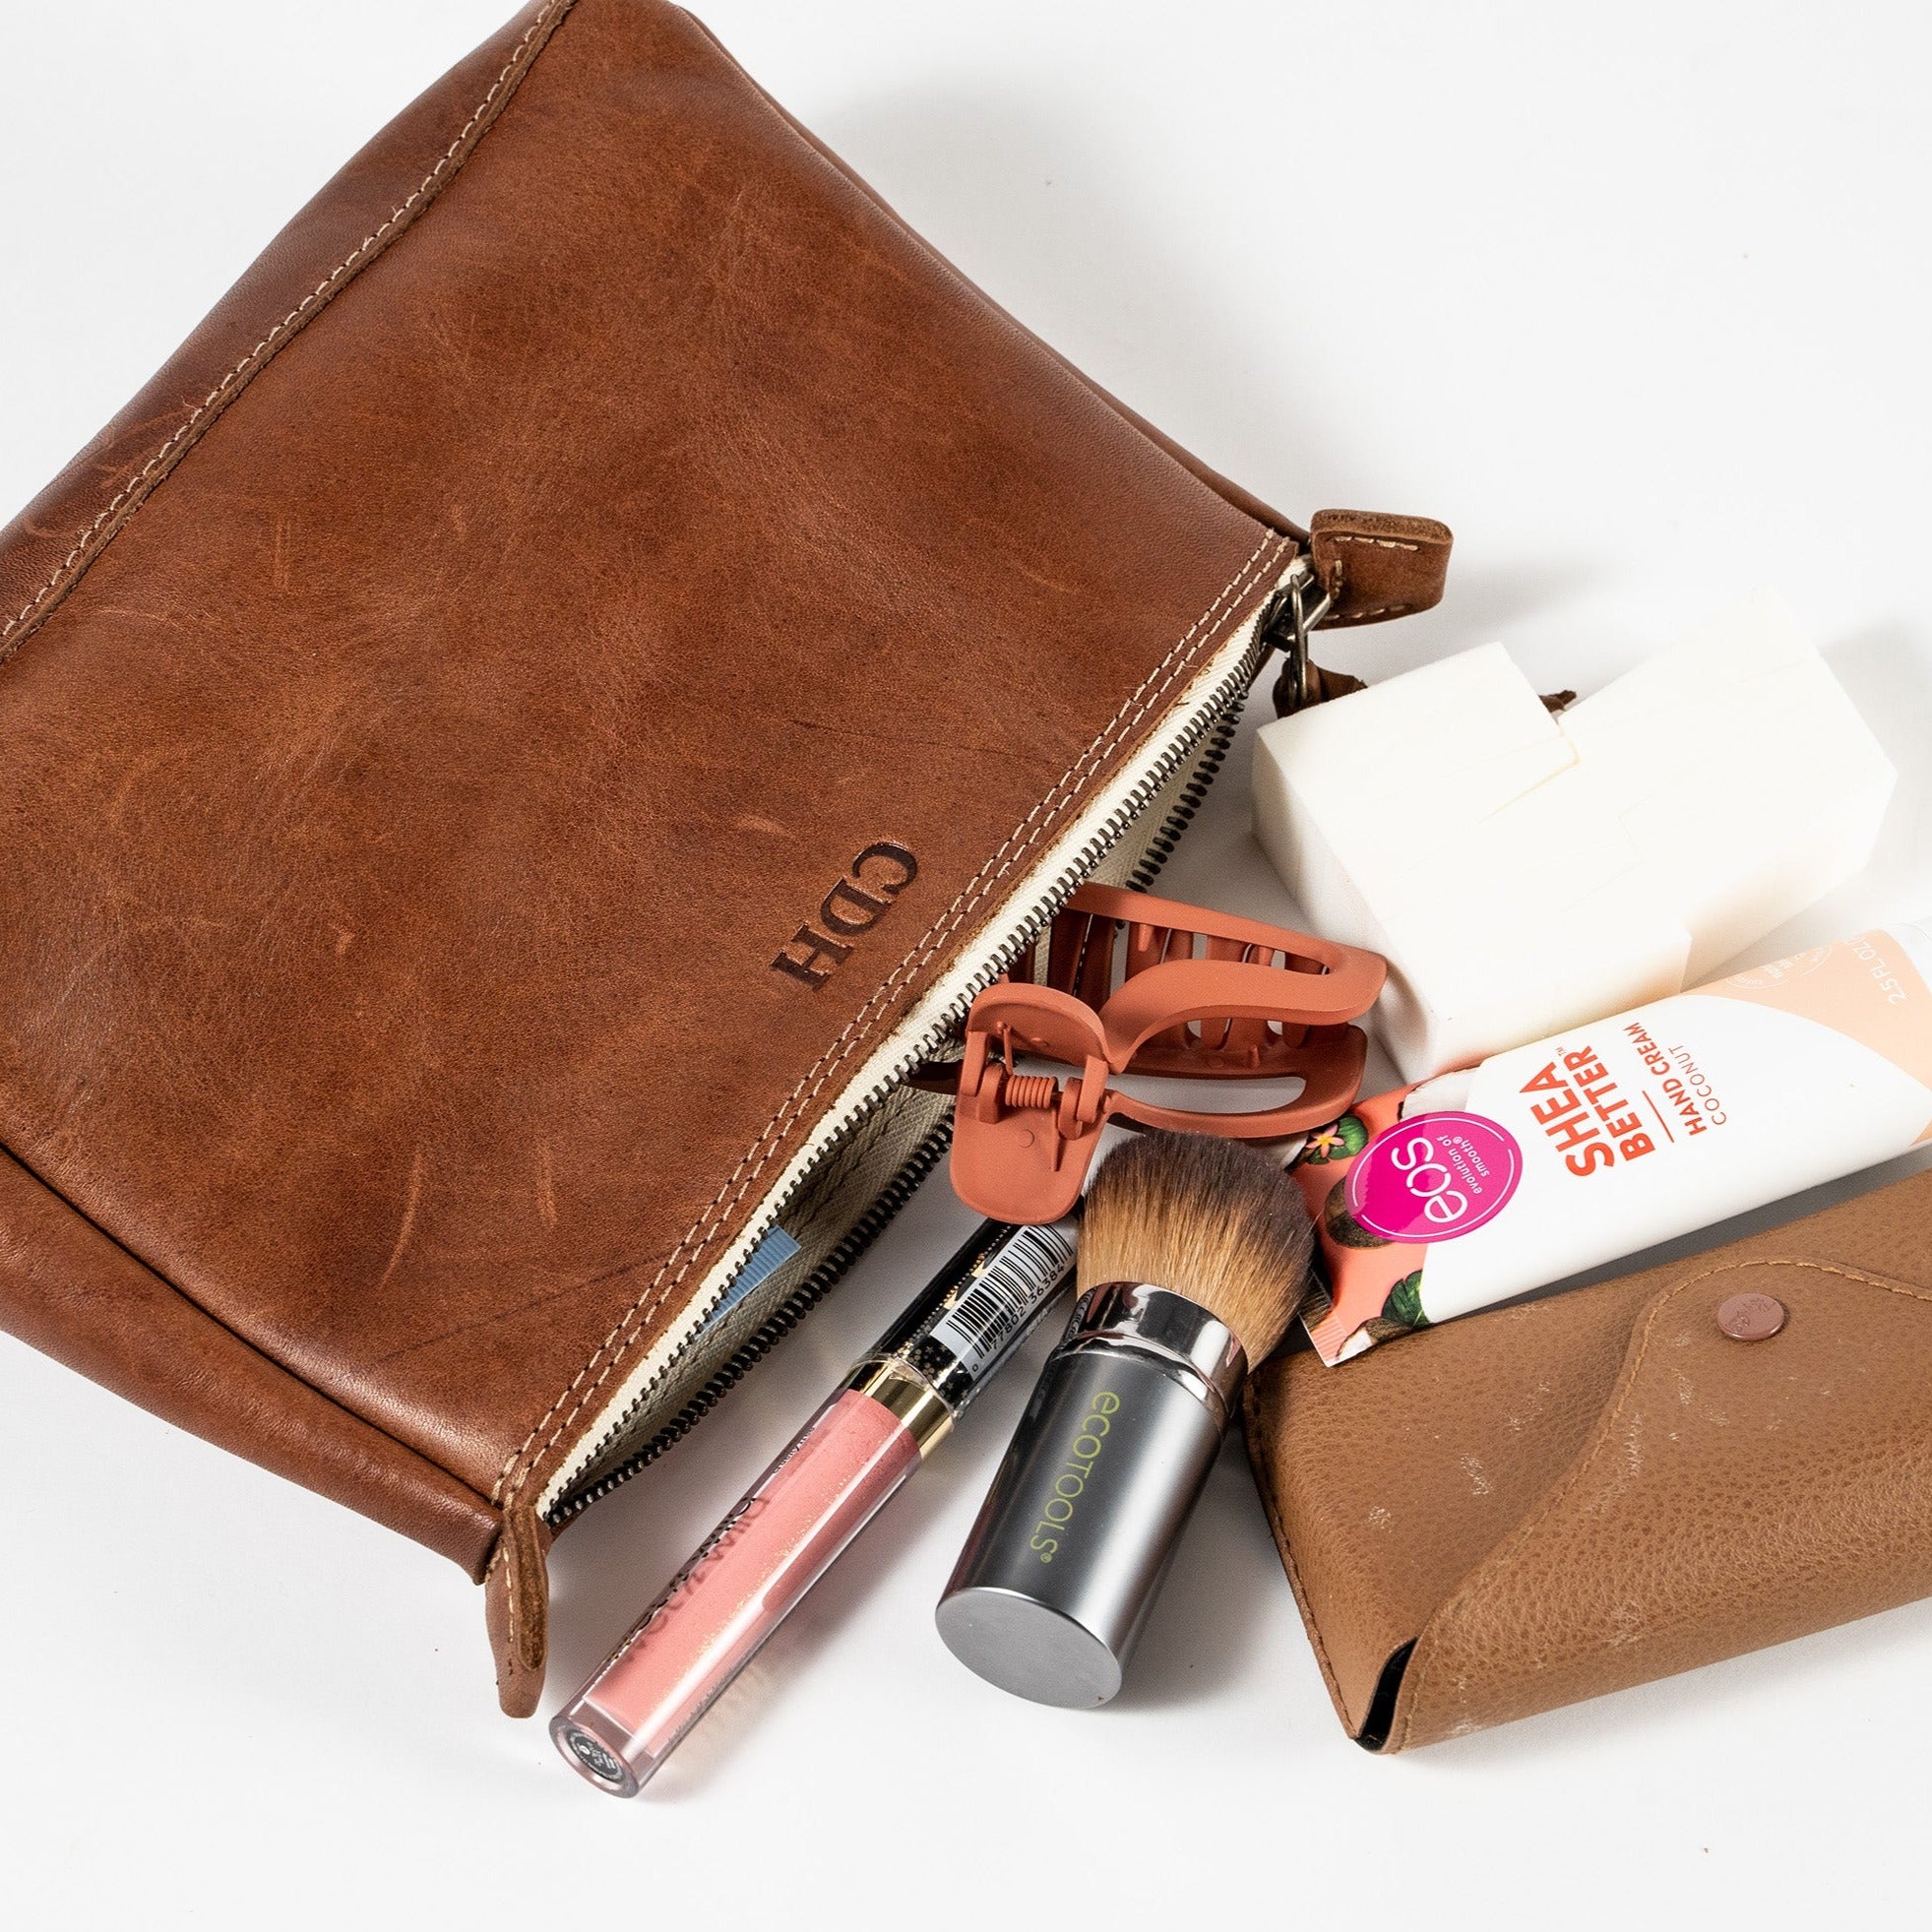  OAKURA Aesthetic Leather Makeup Bag with Zipper